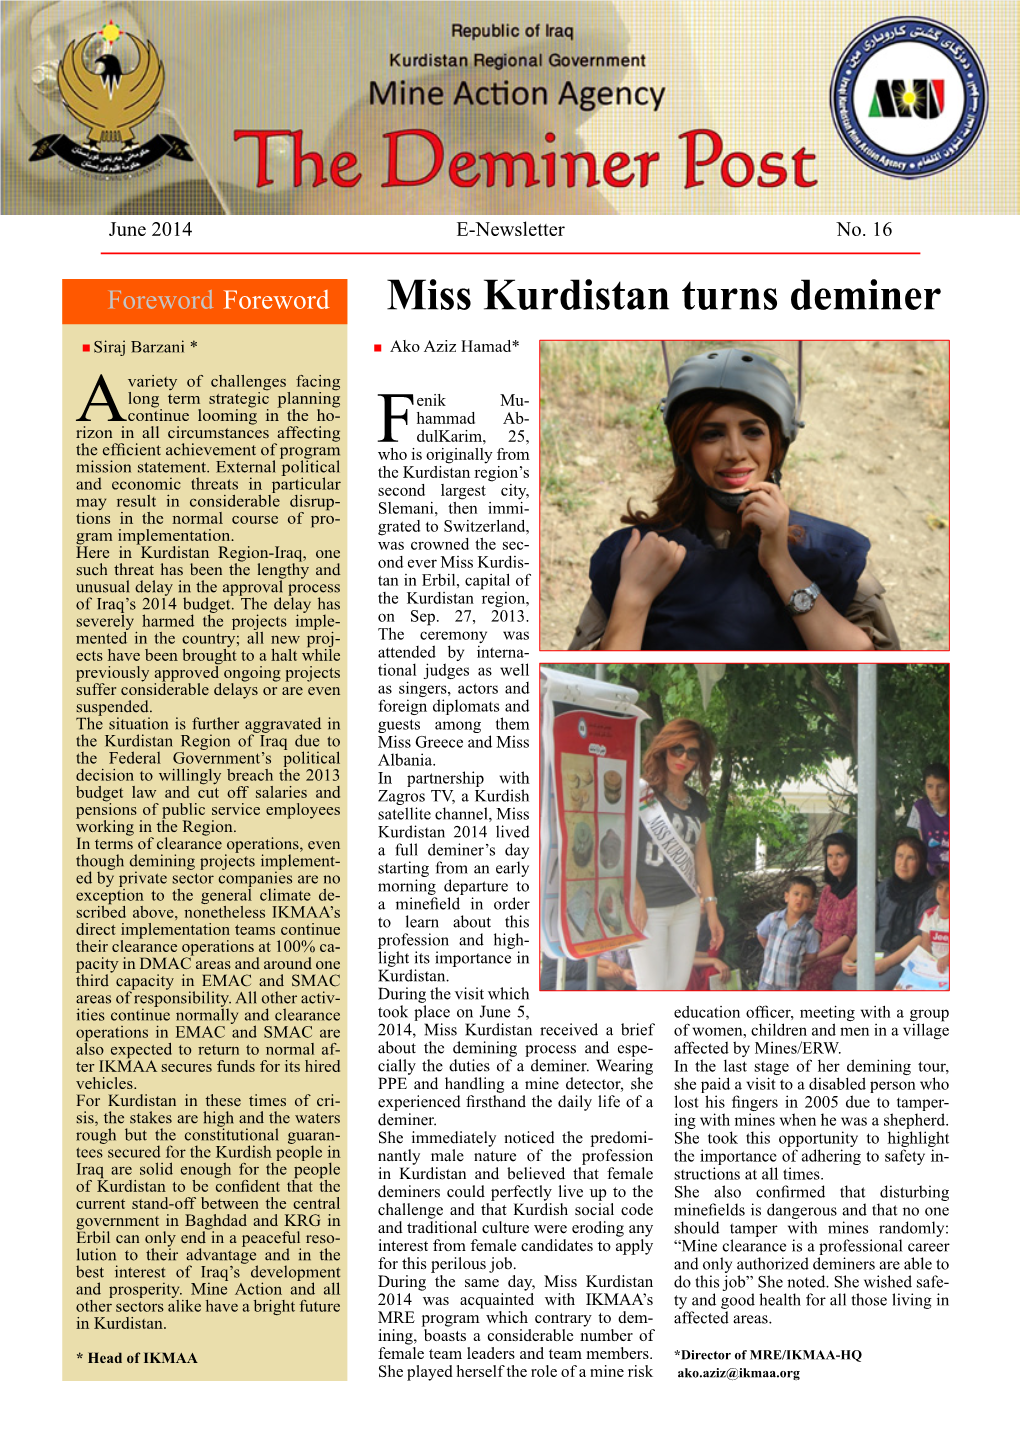 Miss Kurdistan Turns Deminer